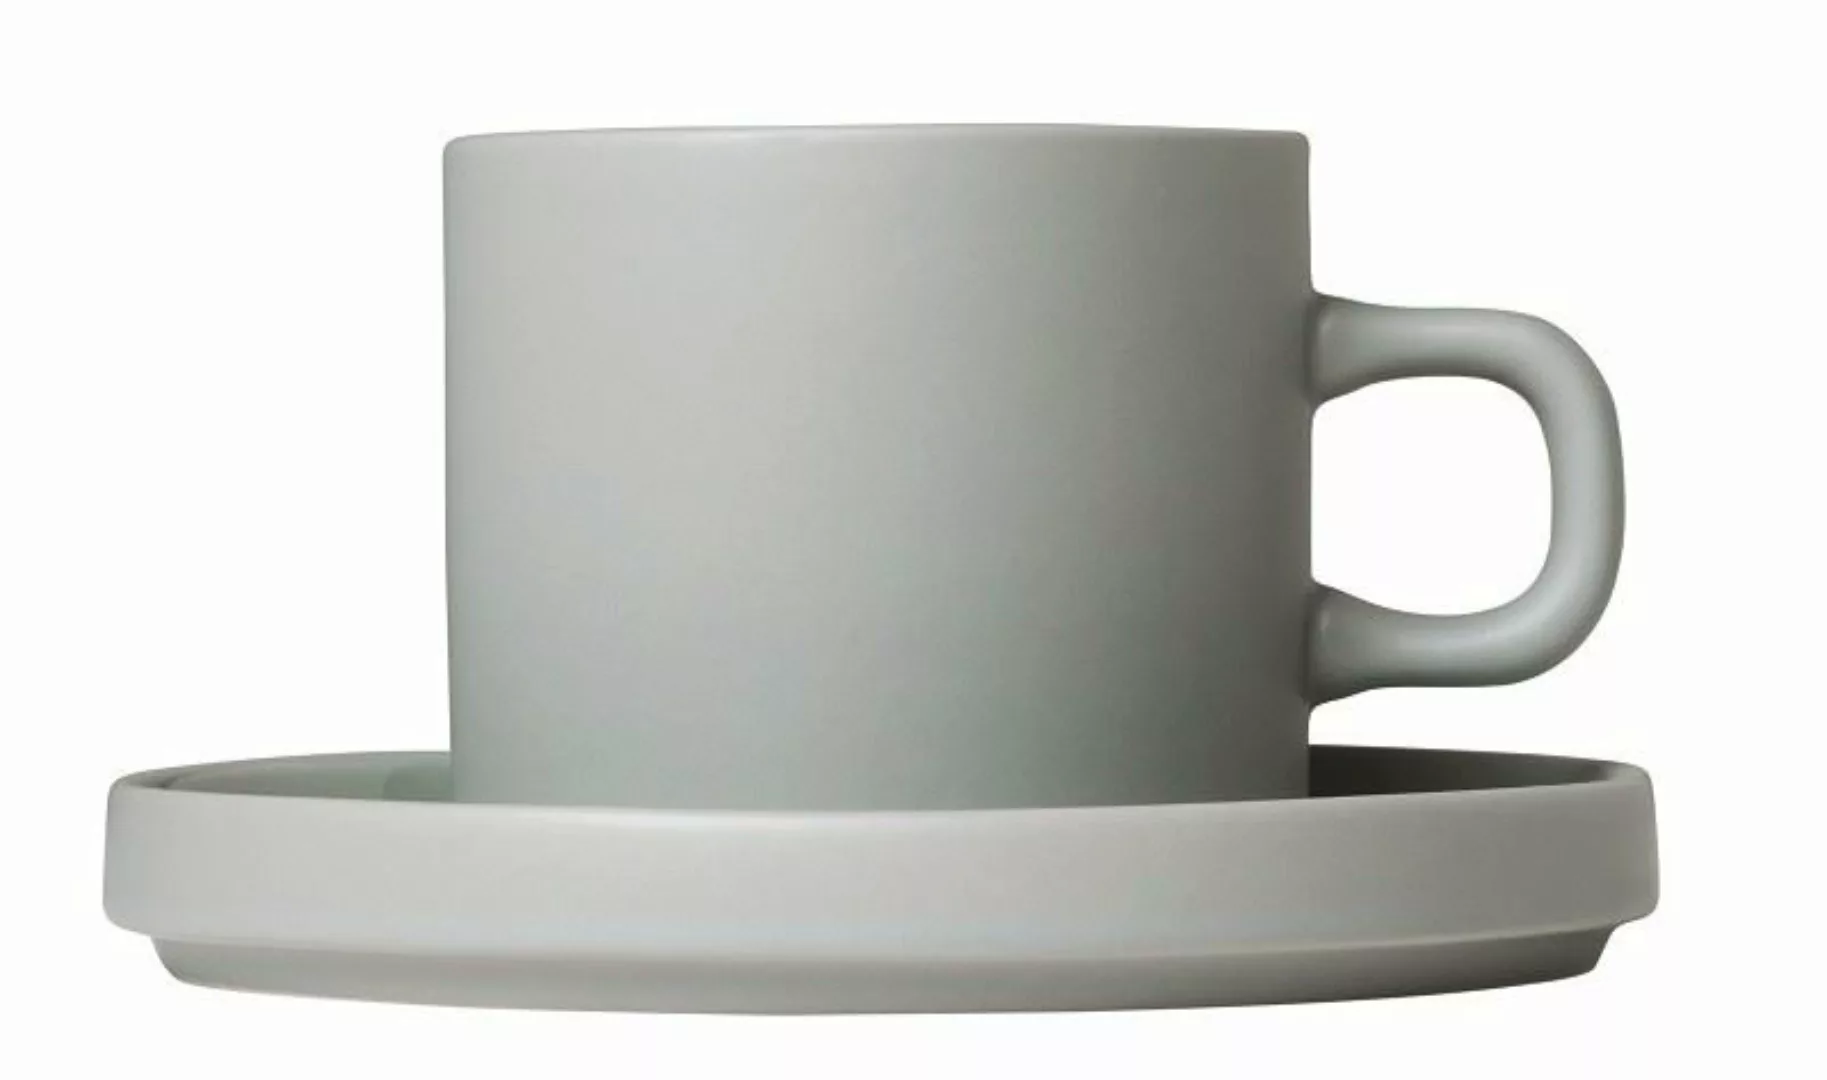 Blomus Kaffee & Co. PILAR Kaffeetassen Set Mirage Grey 4tlg. (grau) günstig online kaufen